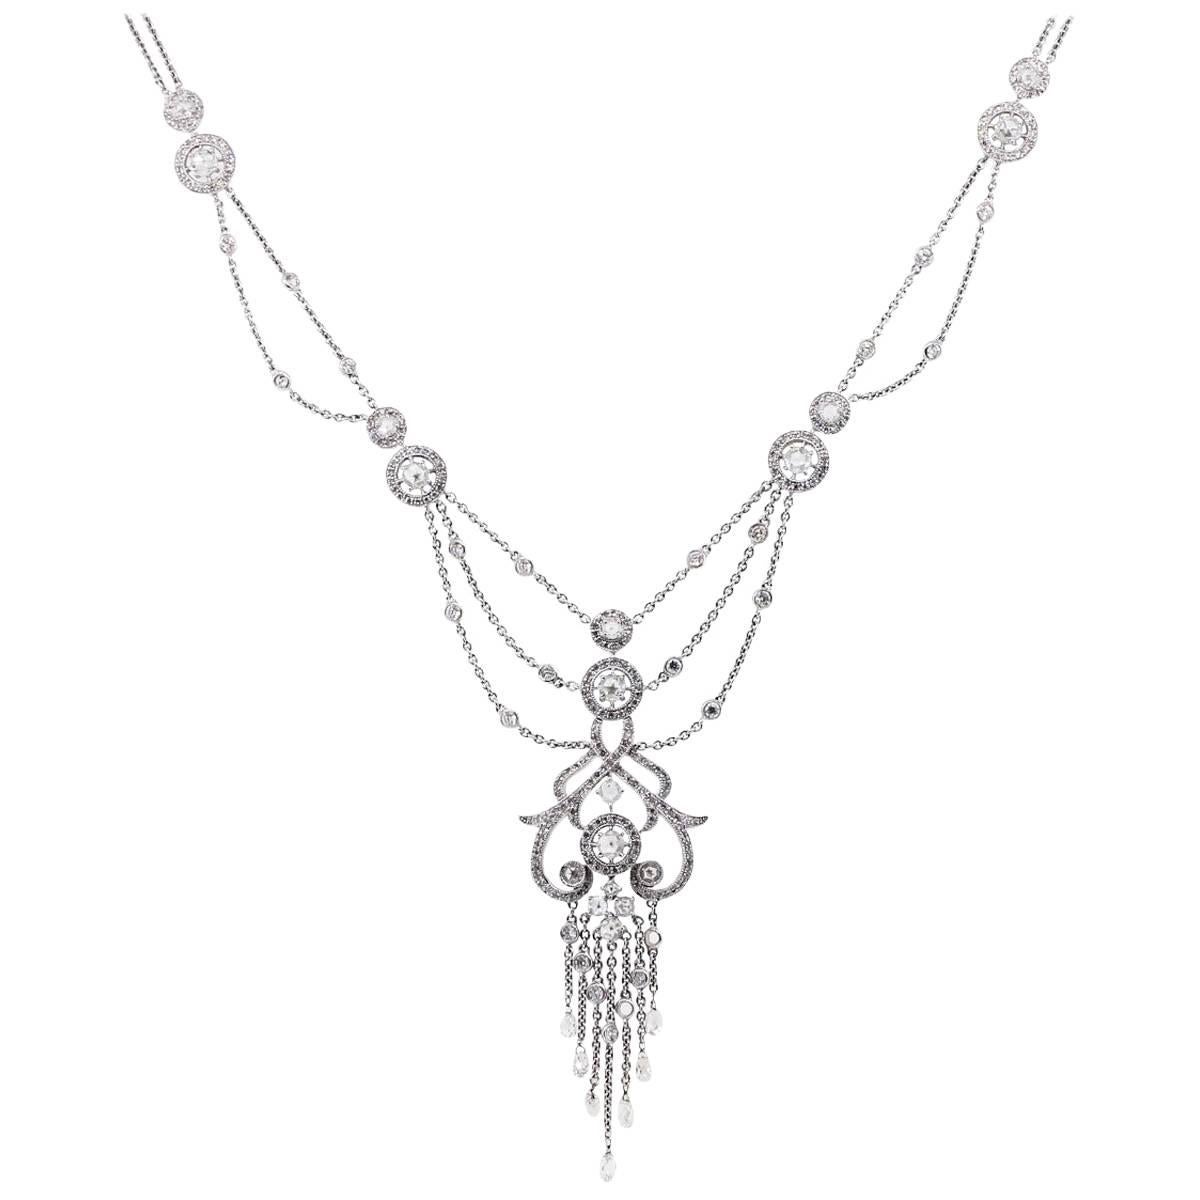 Diamond Chandelier Necklace